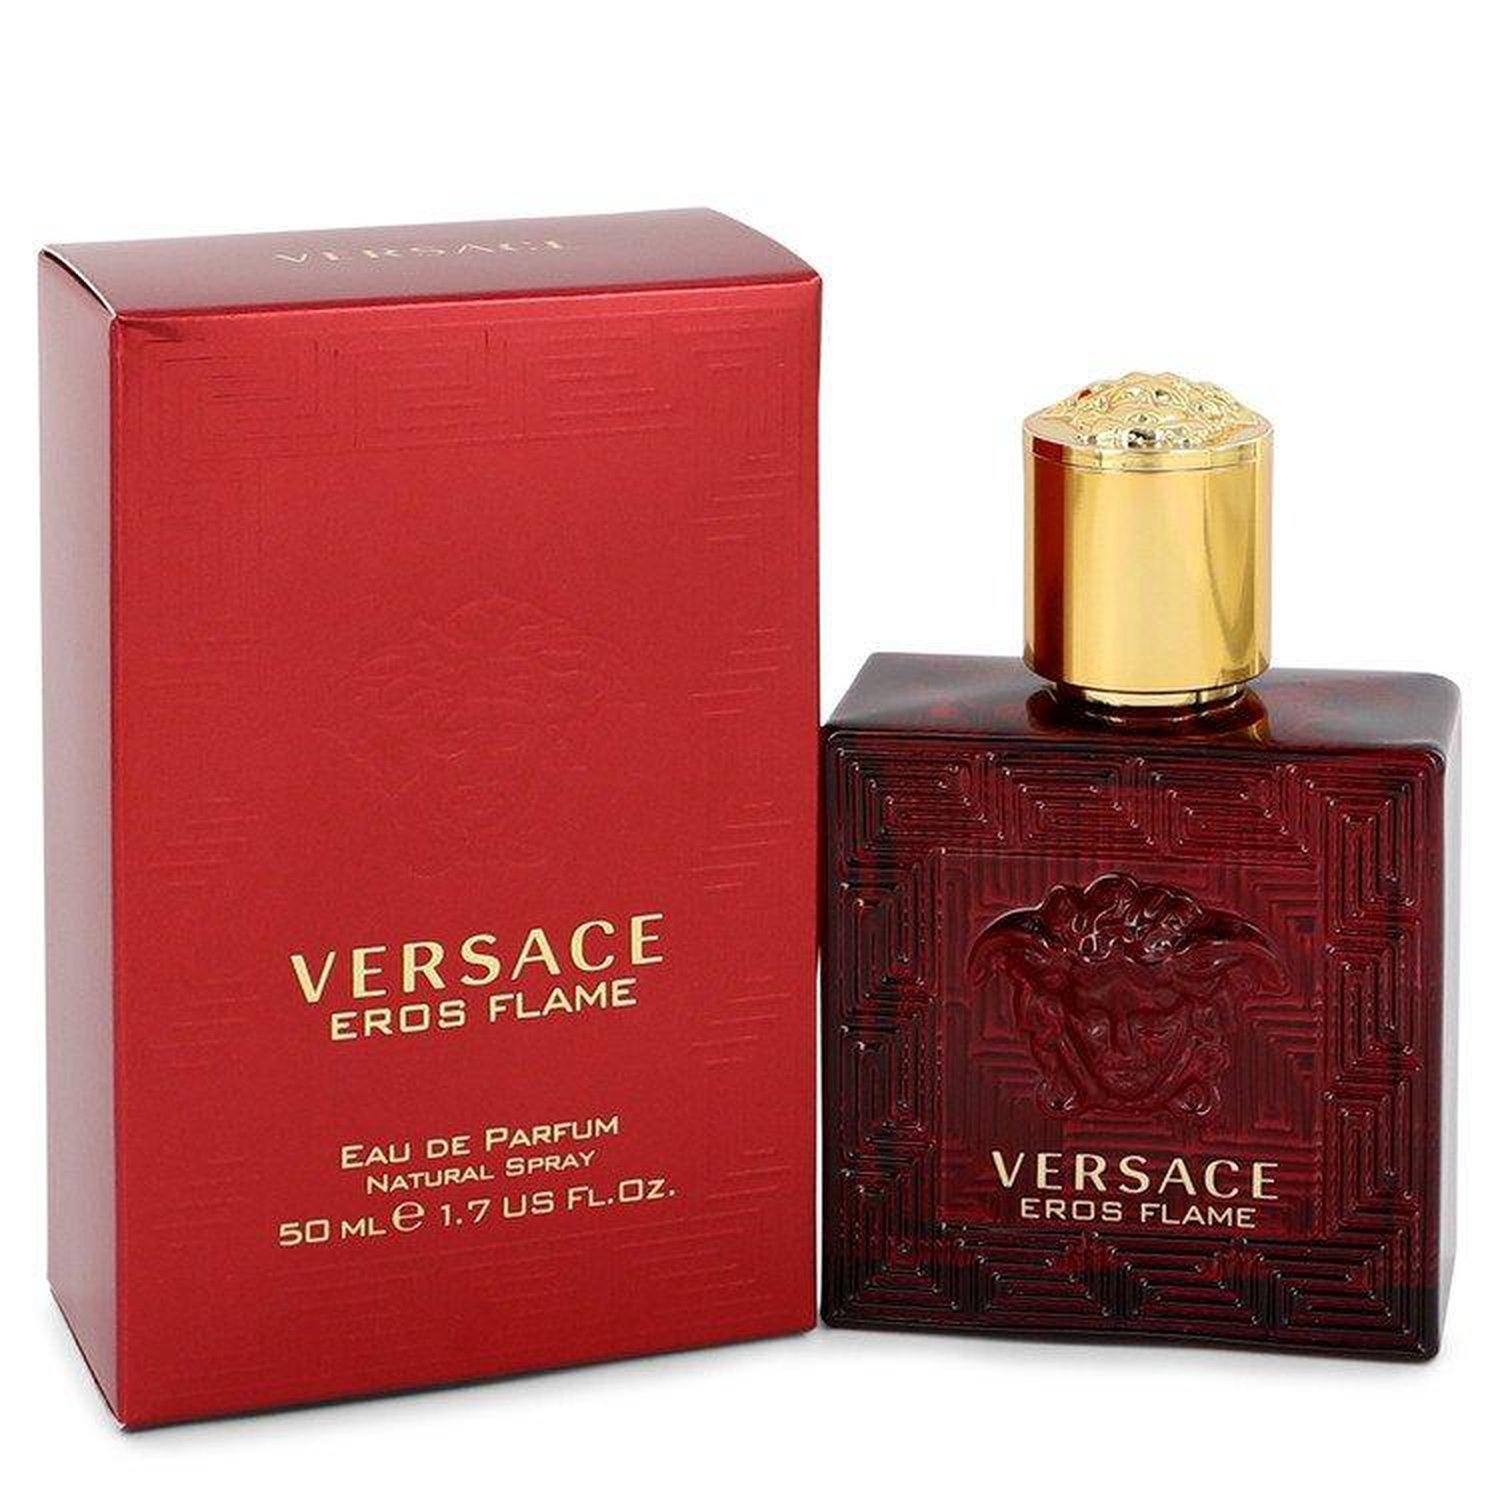 Versace Eros Flame by Versace Eau De Parfum Spray (Men) 1.7 oz